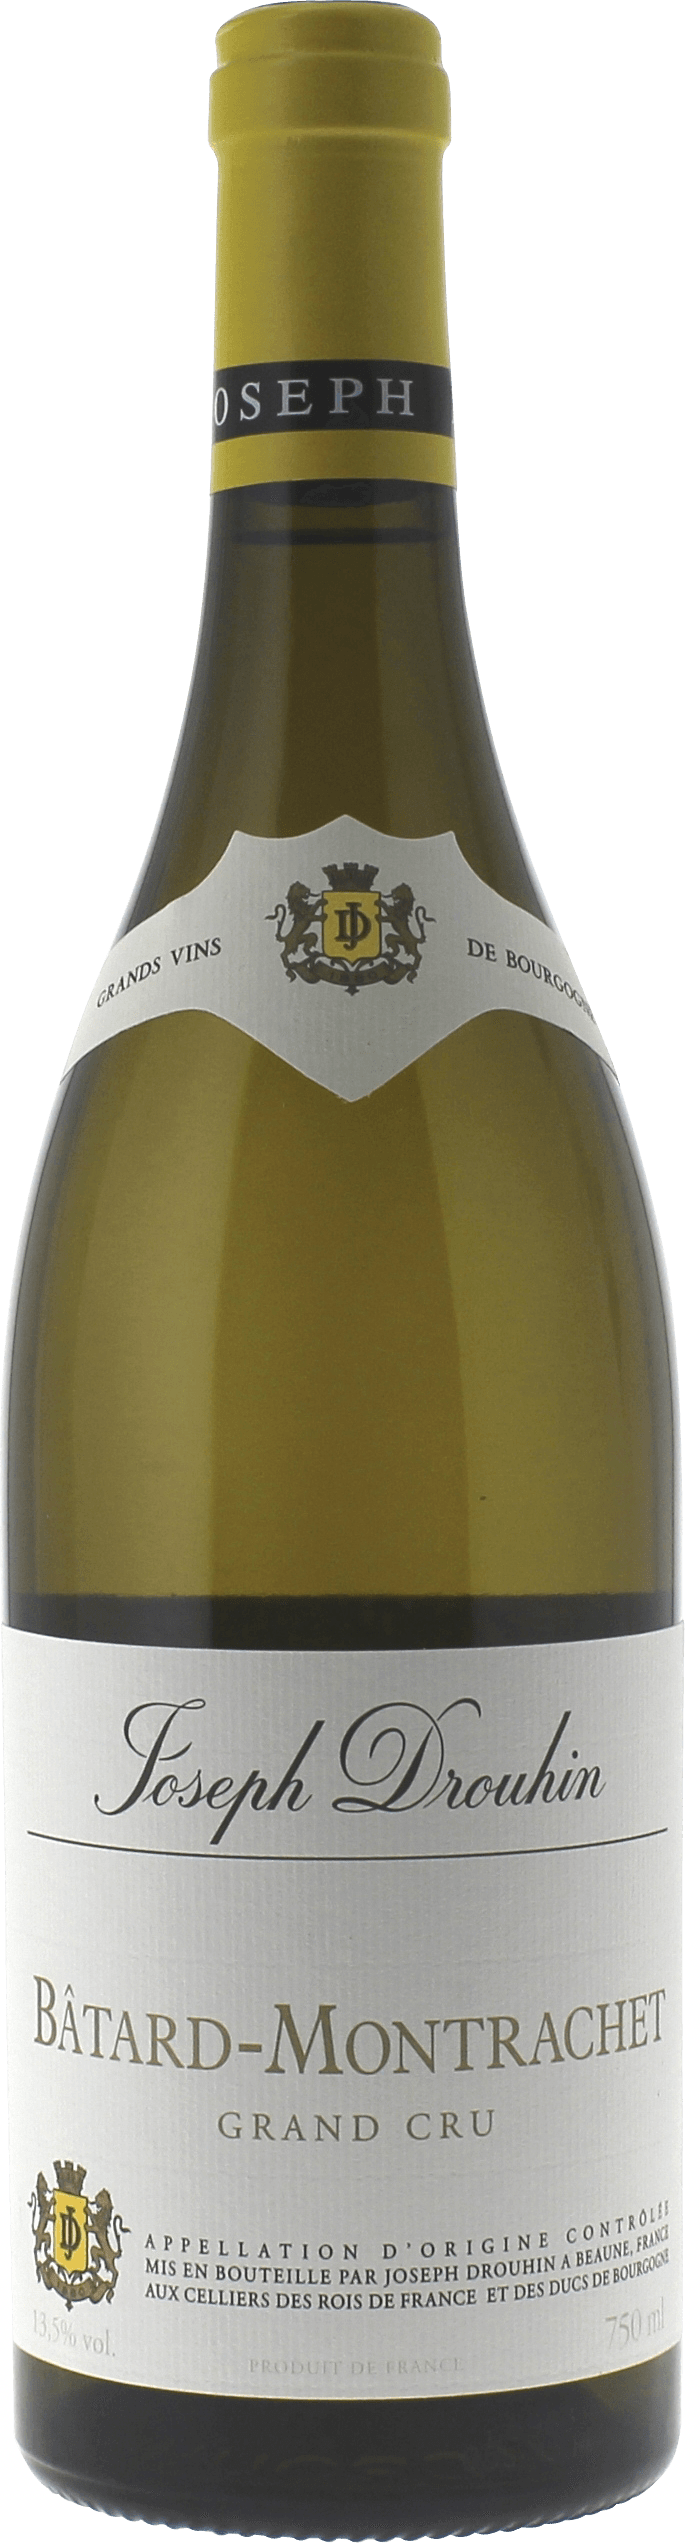 Batard montrachet grand cru 2020 Domaine DROUHIN, Bourgogne blanc